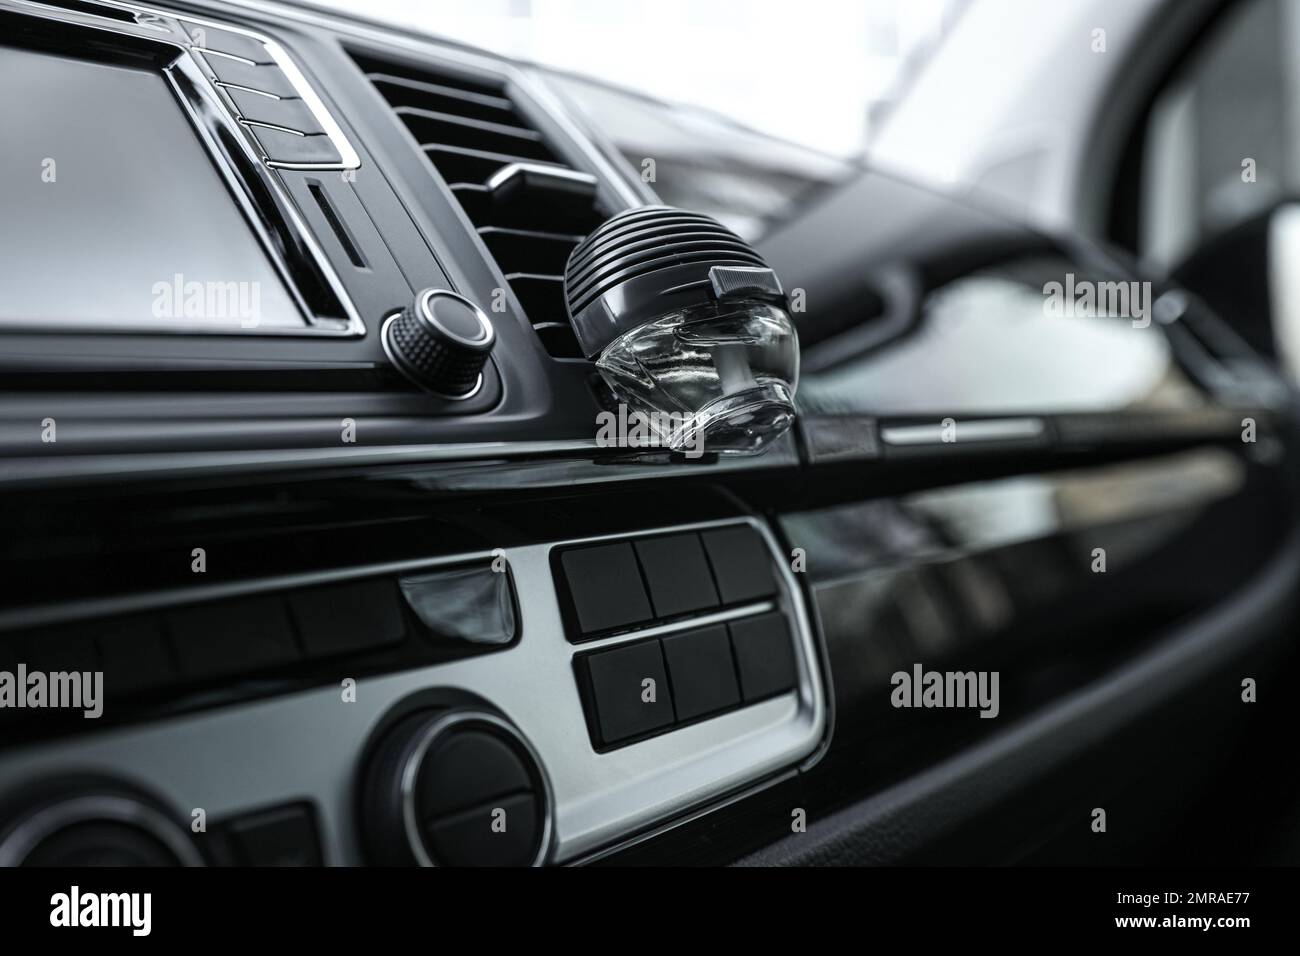 Auto parfüm clip -Fotos und -Bildmaterial in hoher Auflösung – Alamy